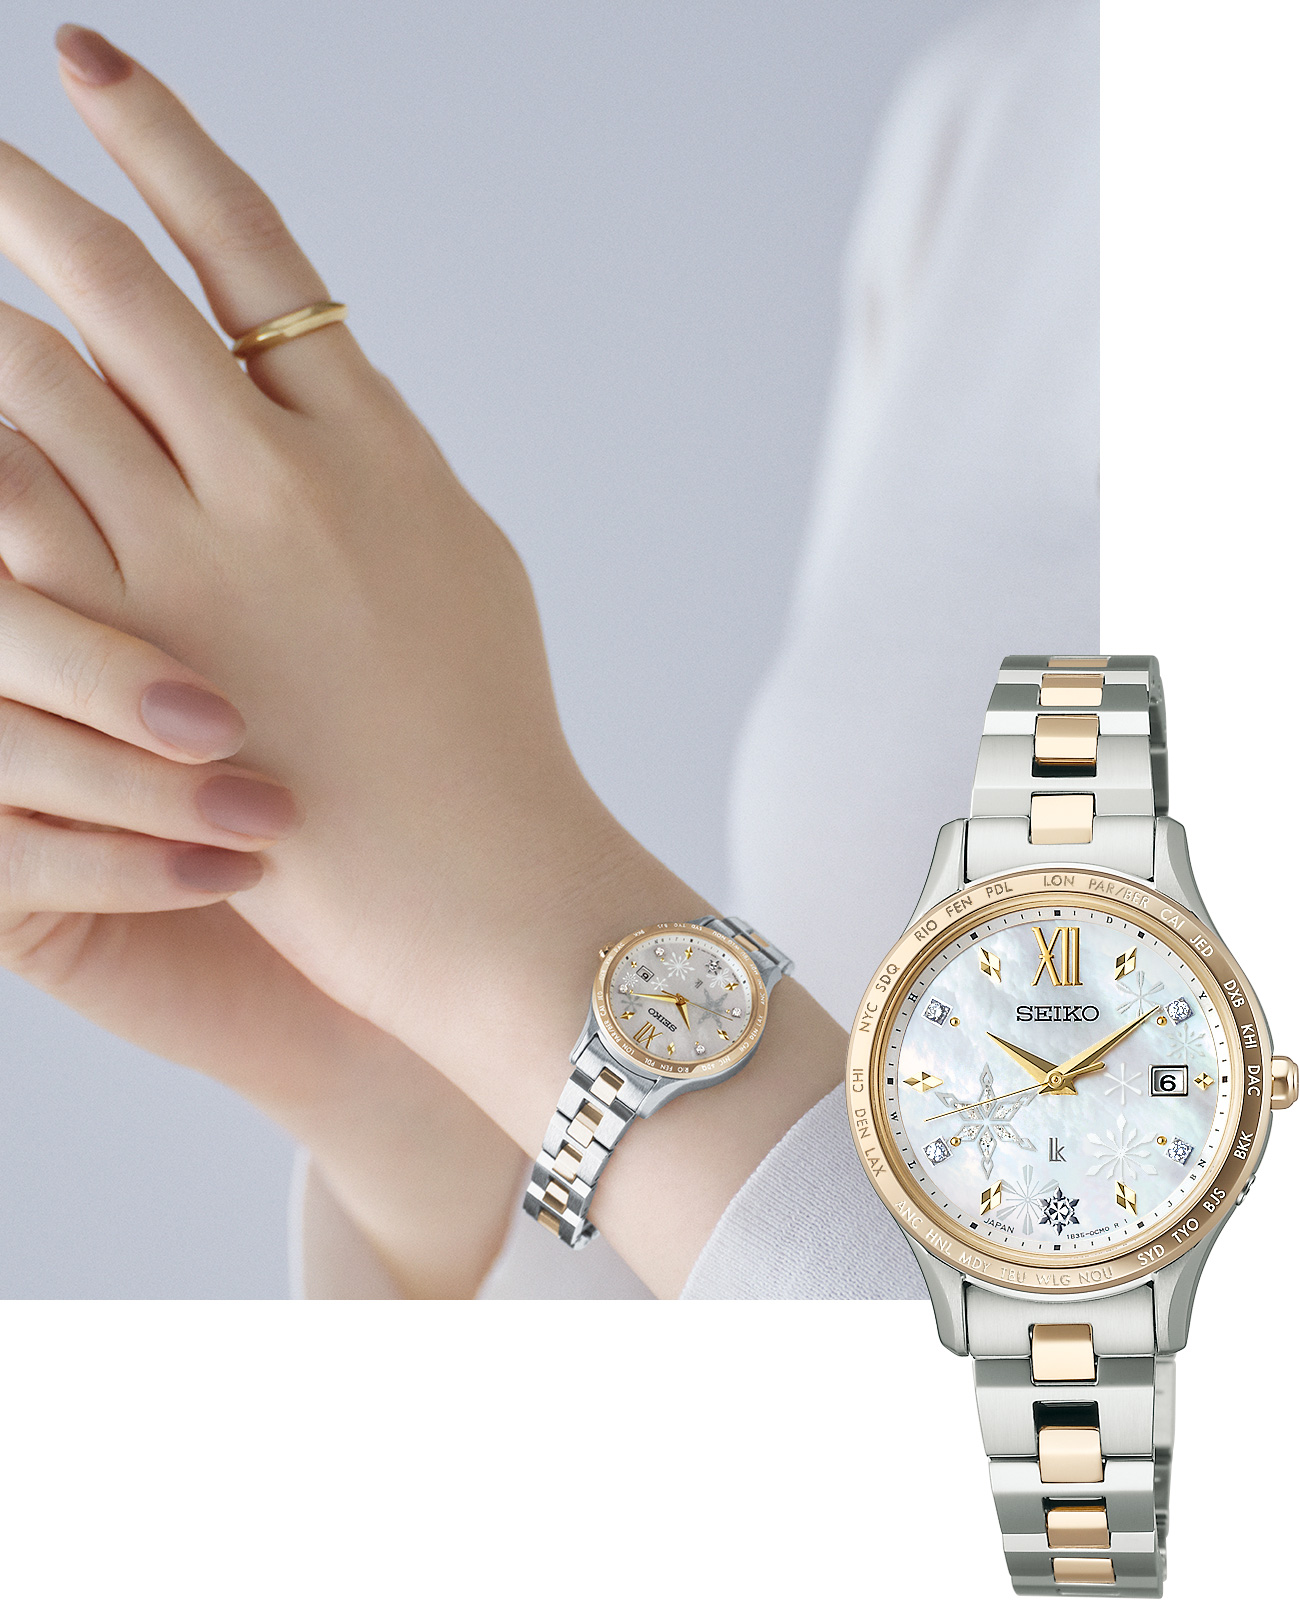 ♡SEIKO♡ルキア レディース 腕時計 シルバー カレンダー 予備コマフグタロウの時計